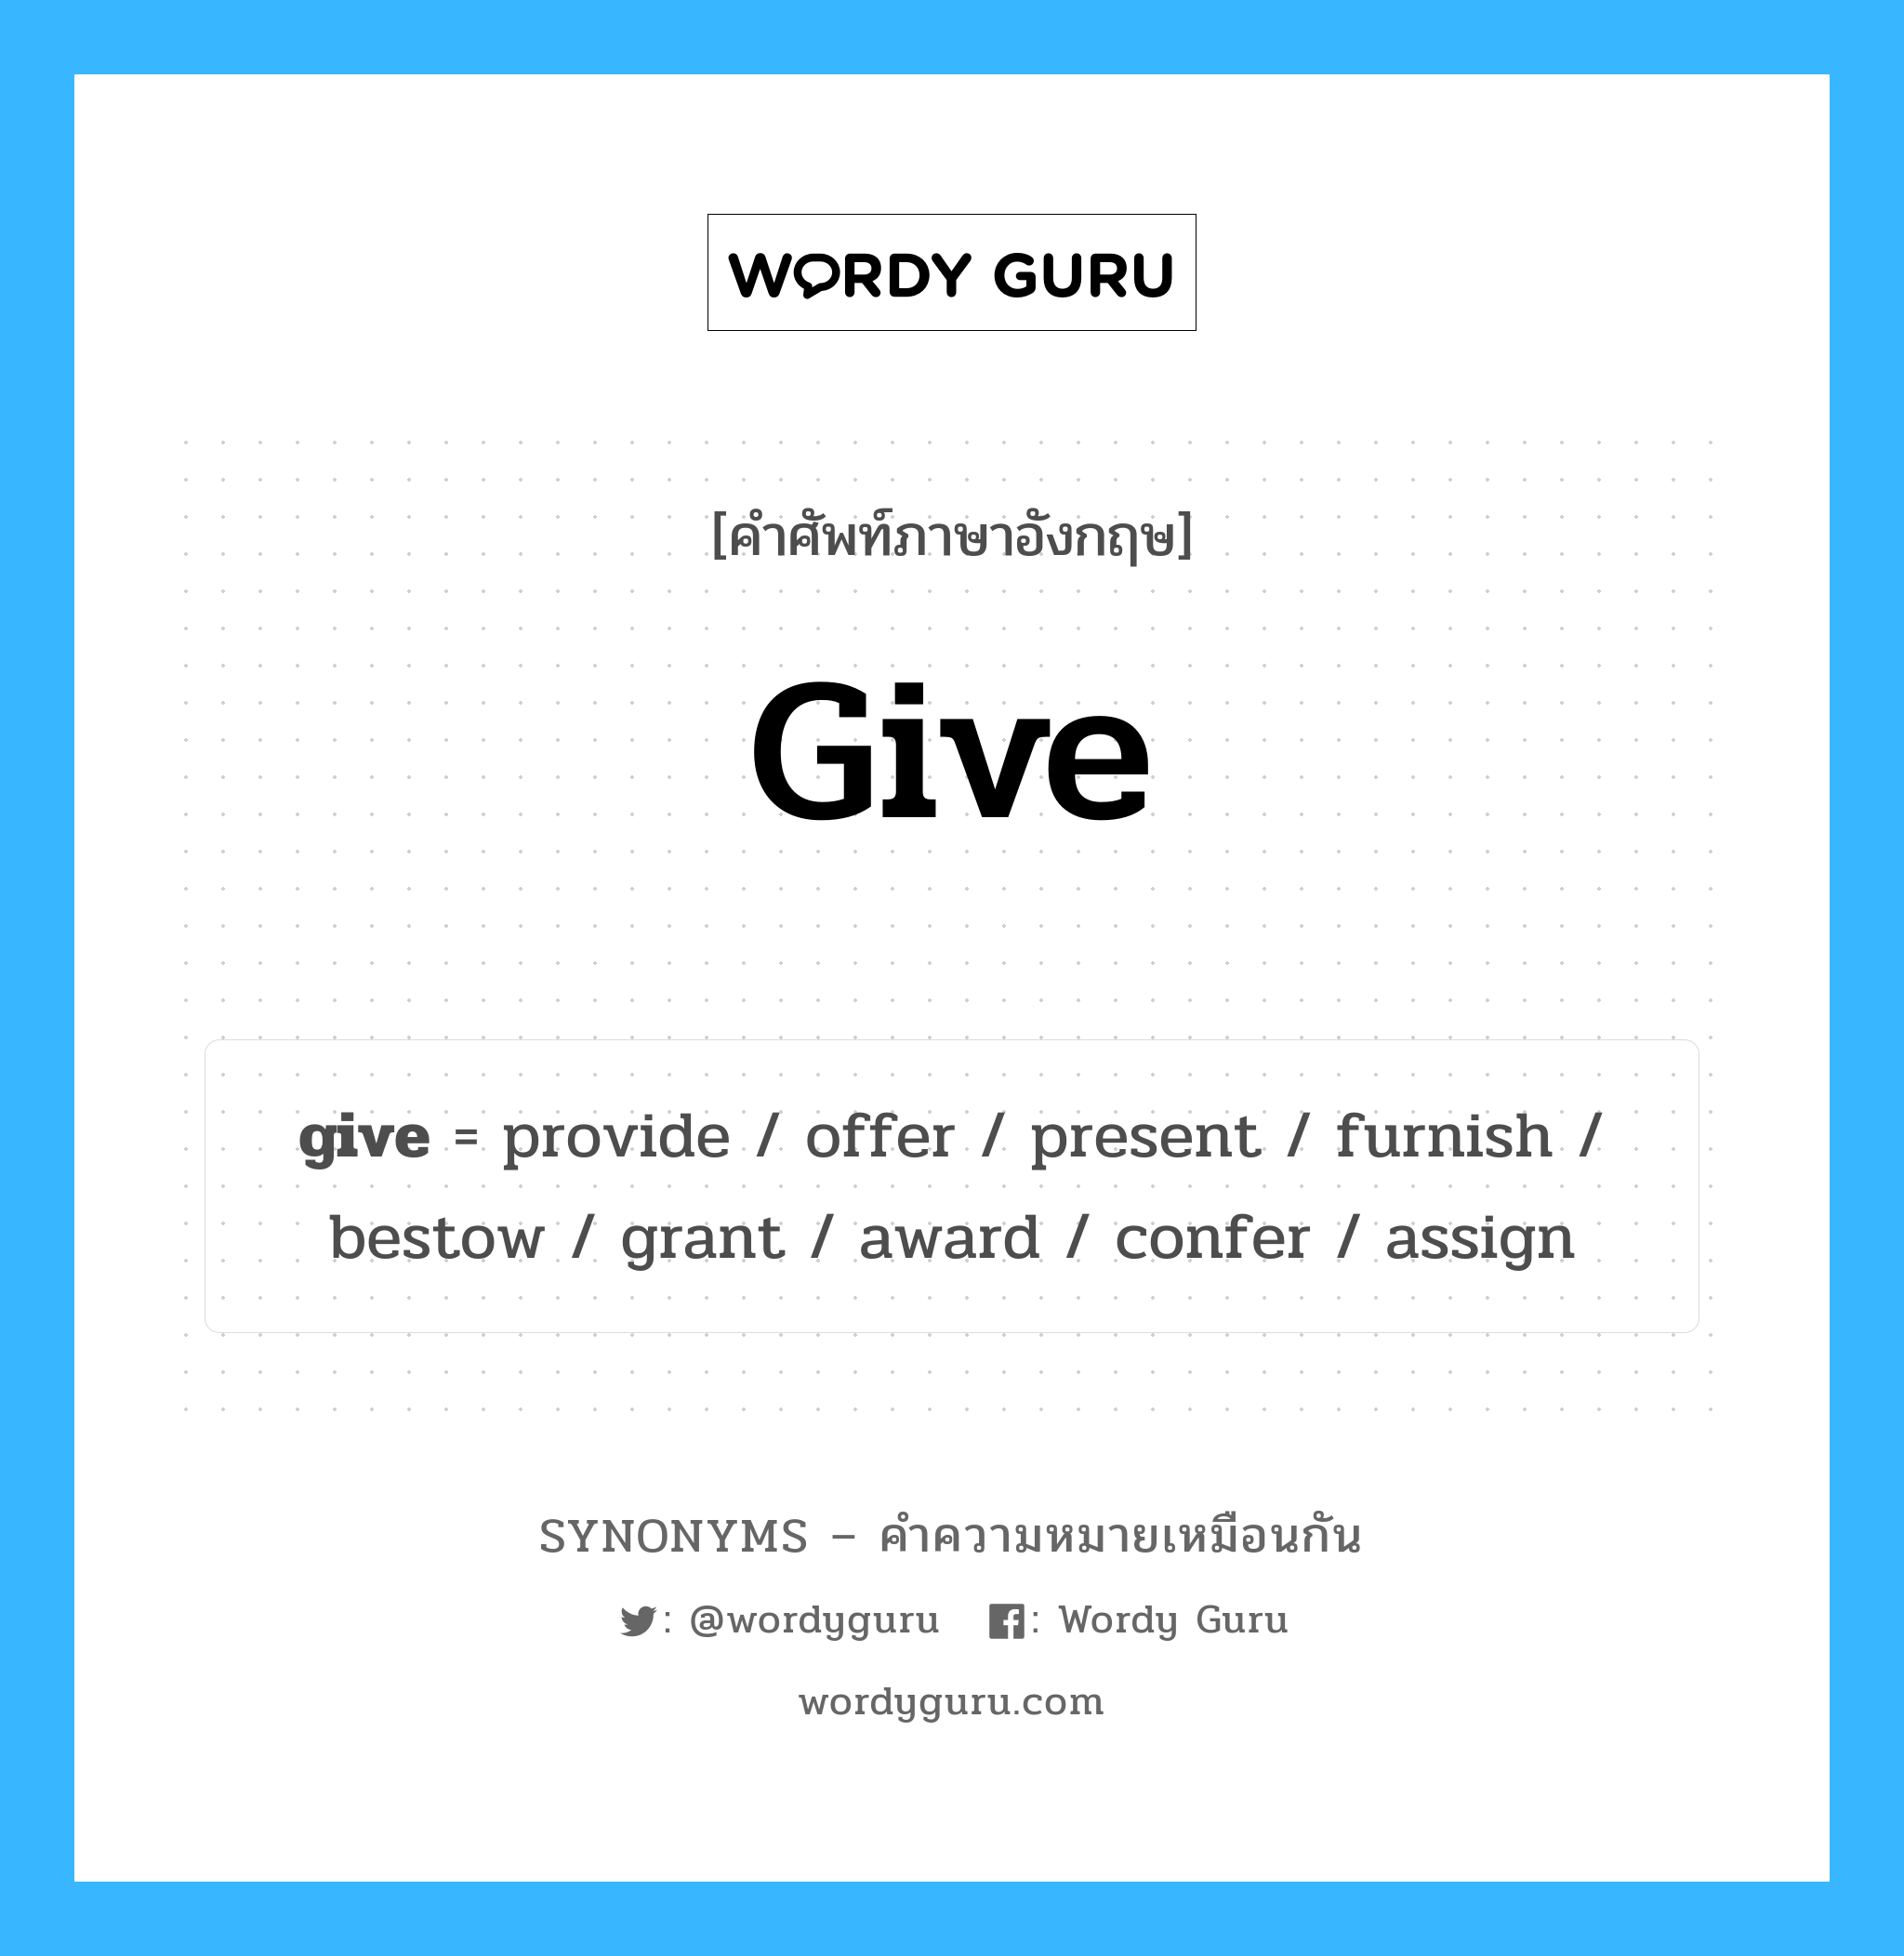 confer เป็นหนึ่งใน give และมีคำอื่น ๆ อีกดังนี้, คำศัพท์ภาษาอังกฤษ confer ความหมายคล้ายกันกับ give แปลว่า มอบให้ หมวด give